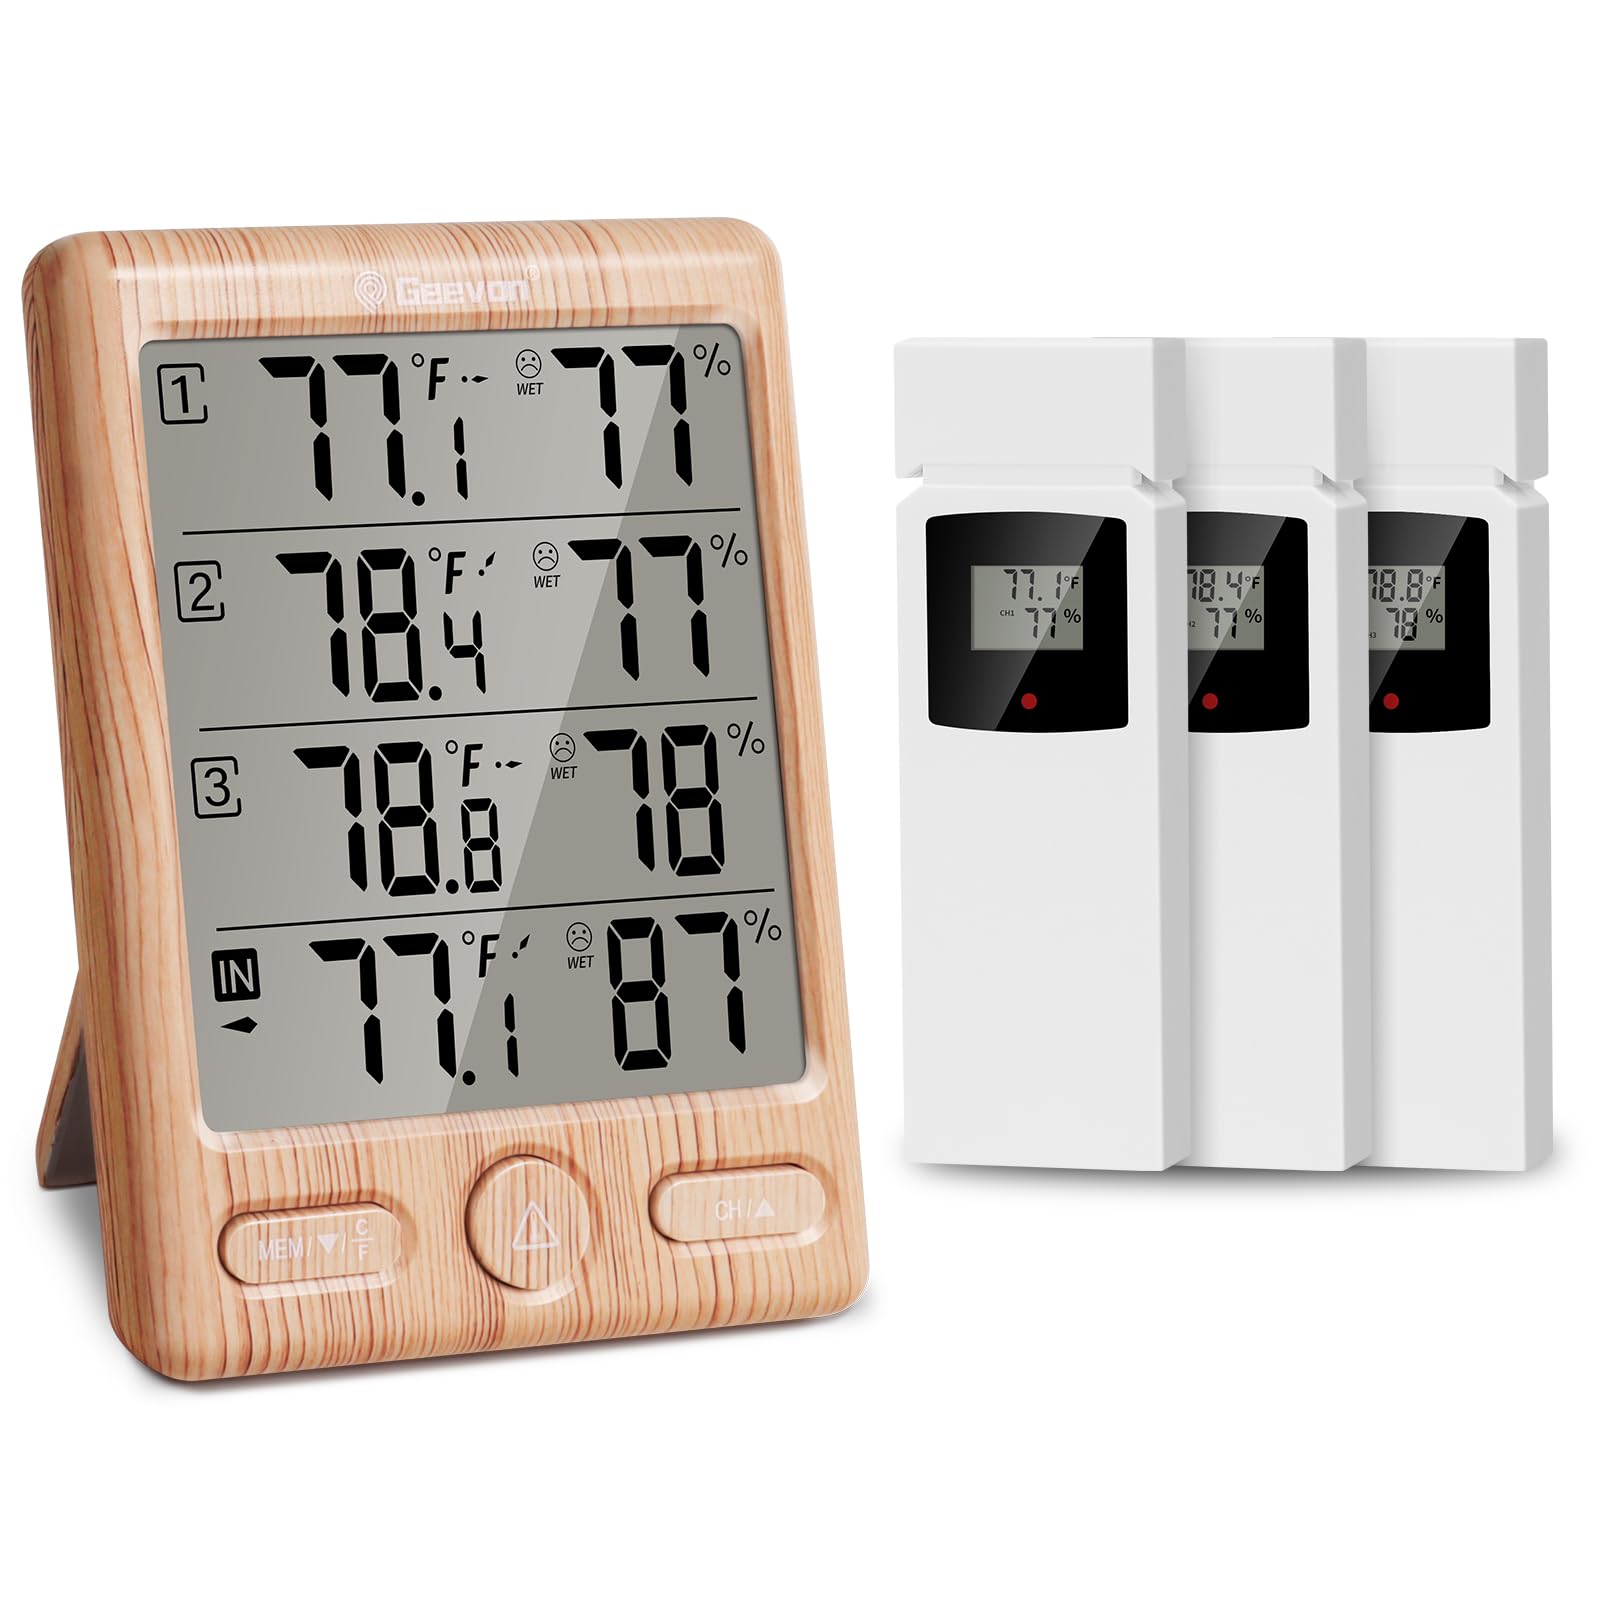 GEEVON 228646 Geevon Indoor Outdoor Thermometer Wireless with 3